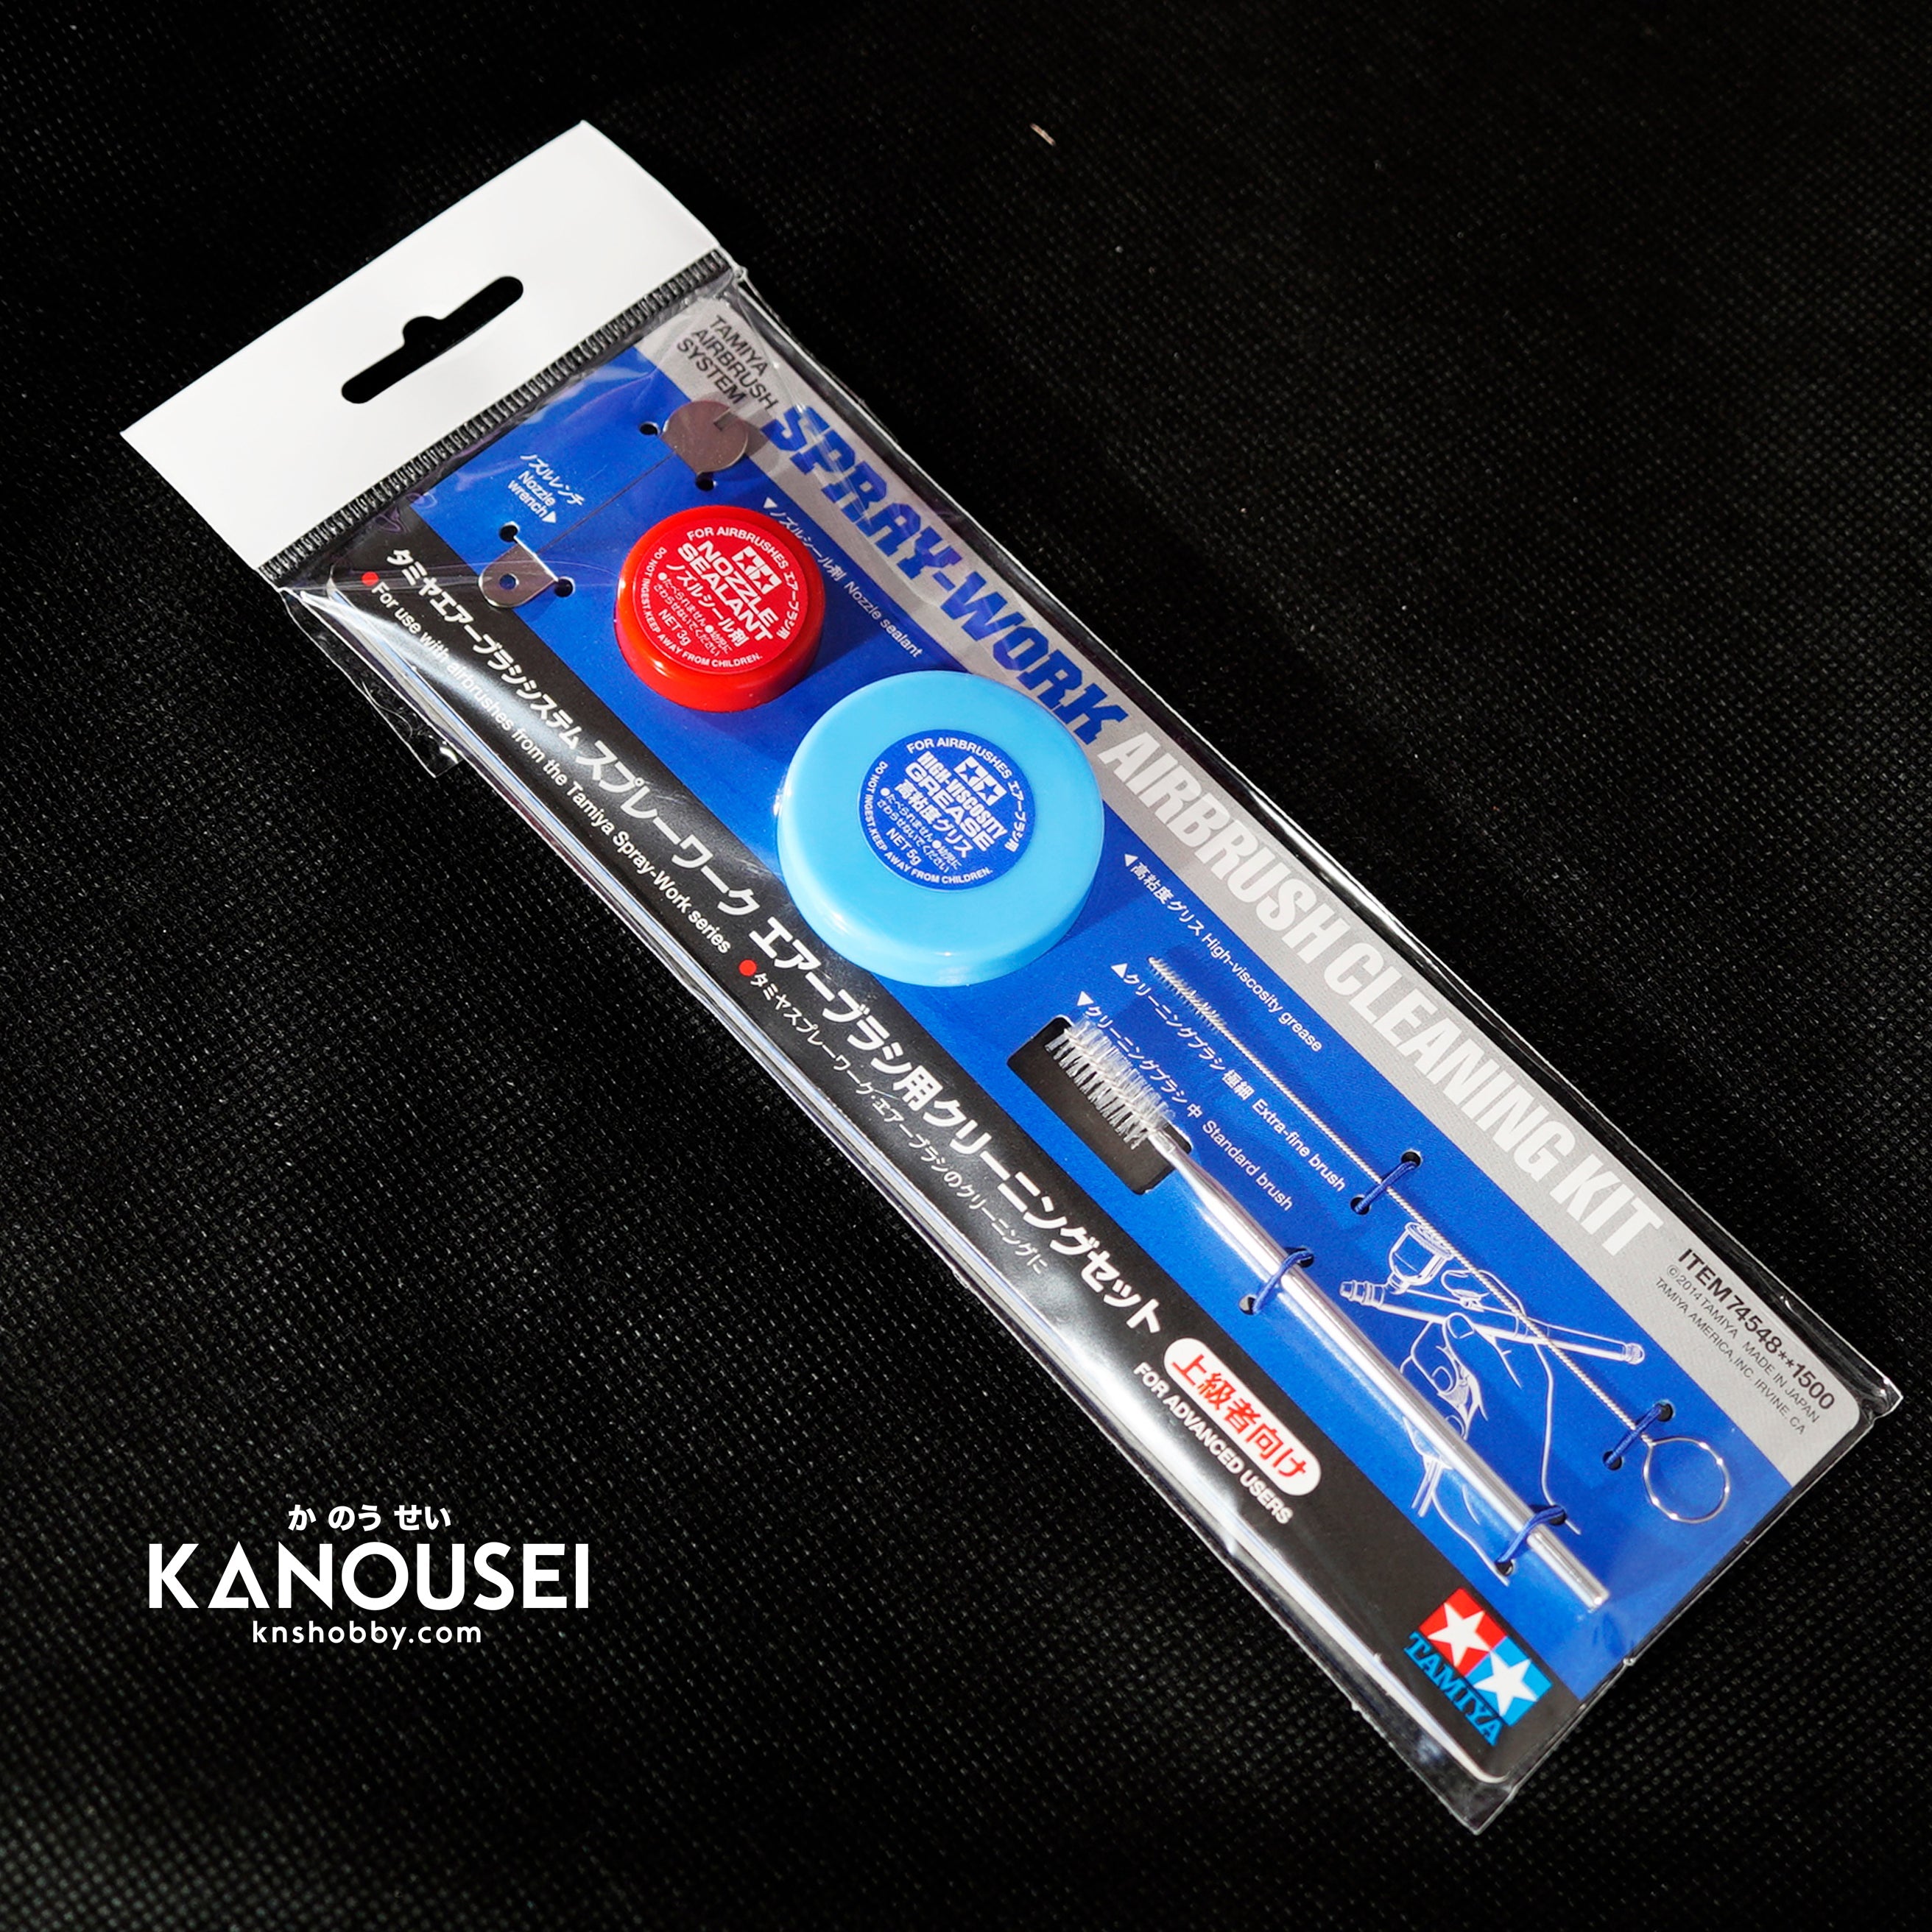 KNS Hobby - Tamiya Tamiya Airbrush Cleaning Kit – KANOUSEI HOBBY